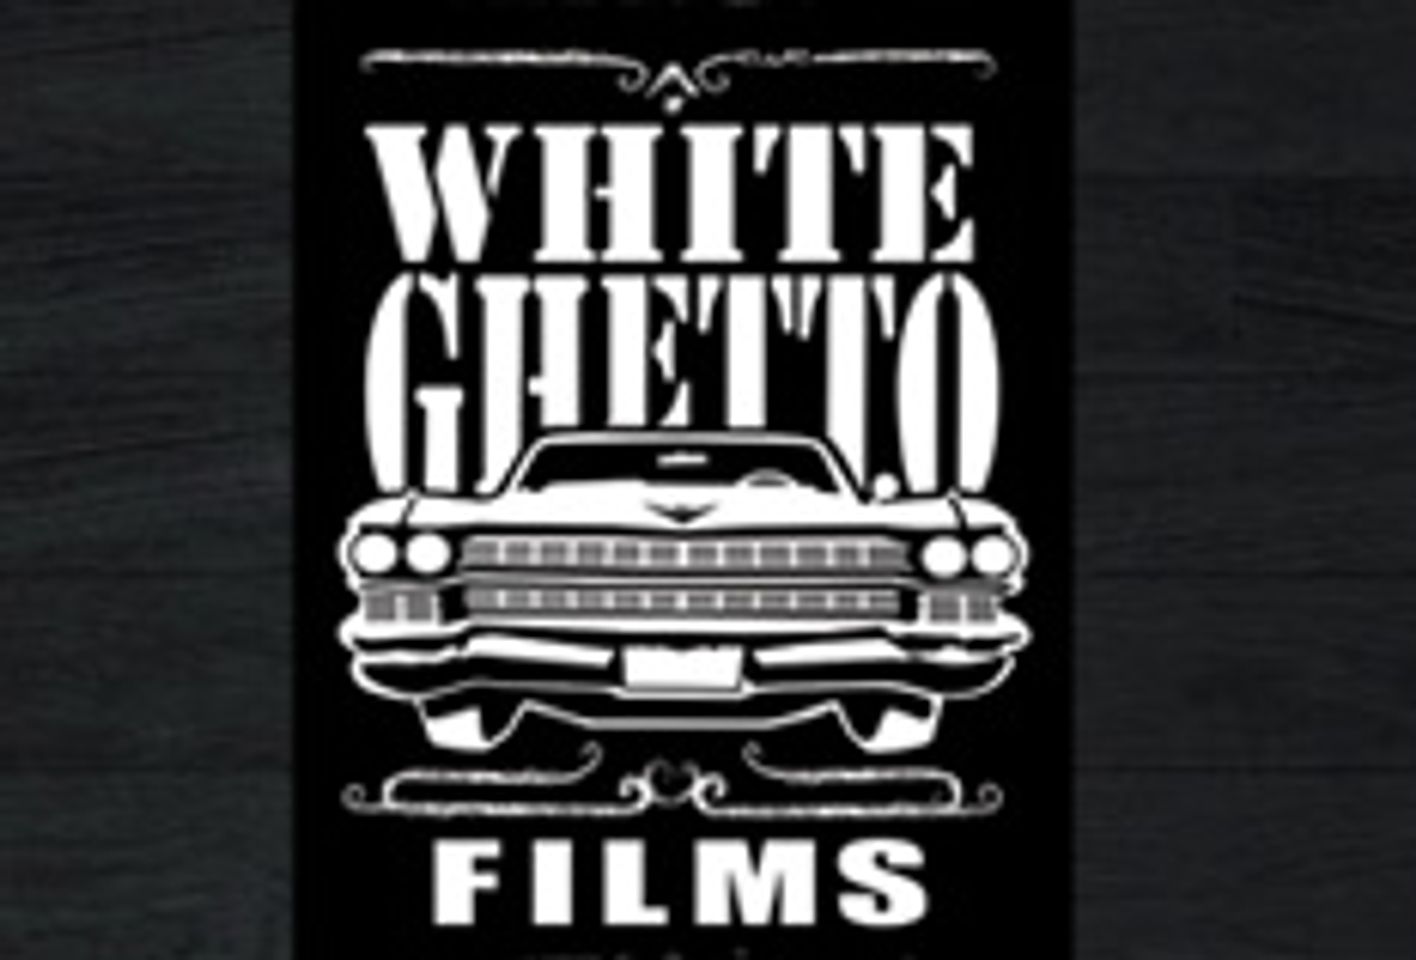 White Ghetto Films Offers Free Promotional DVD “Starter Kits”